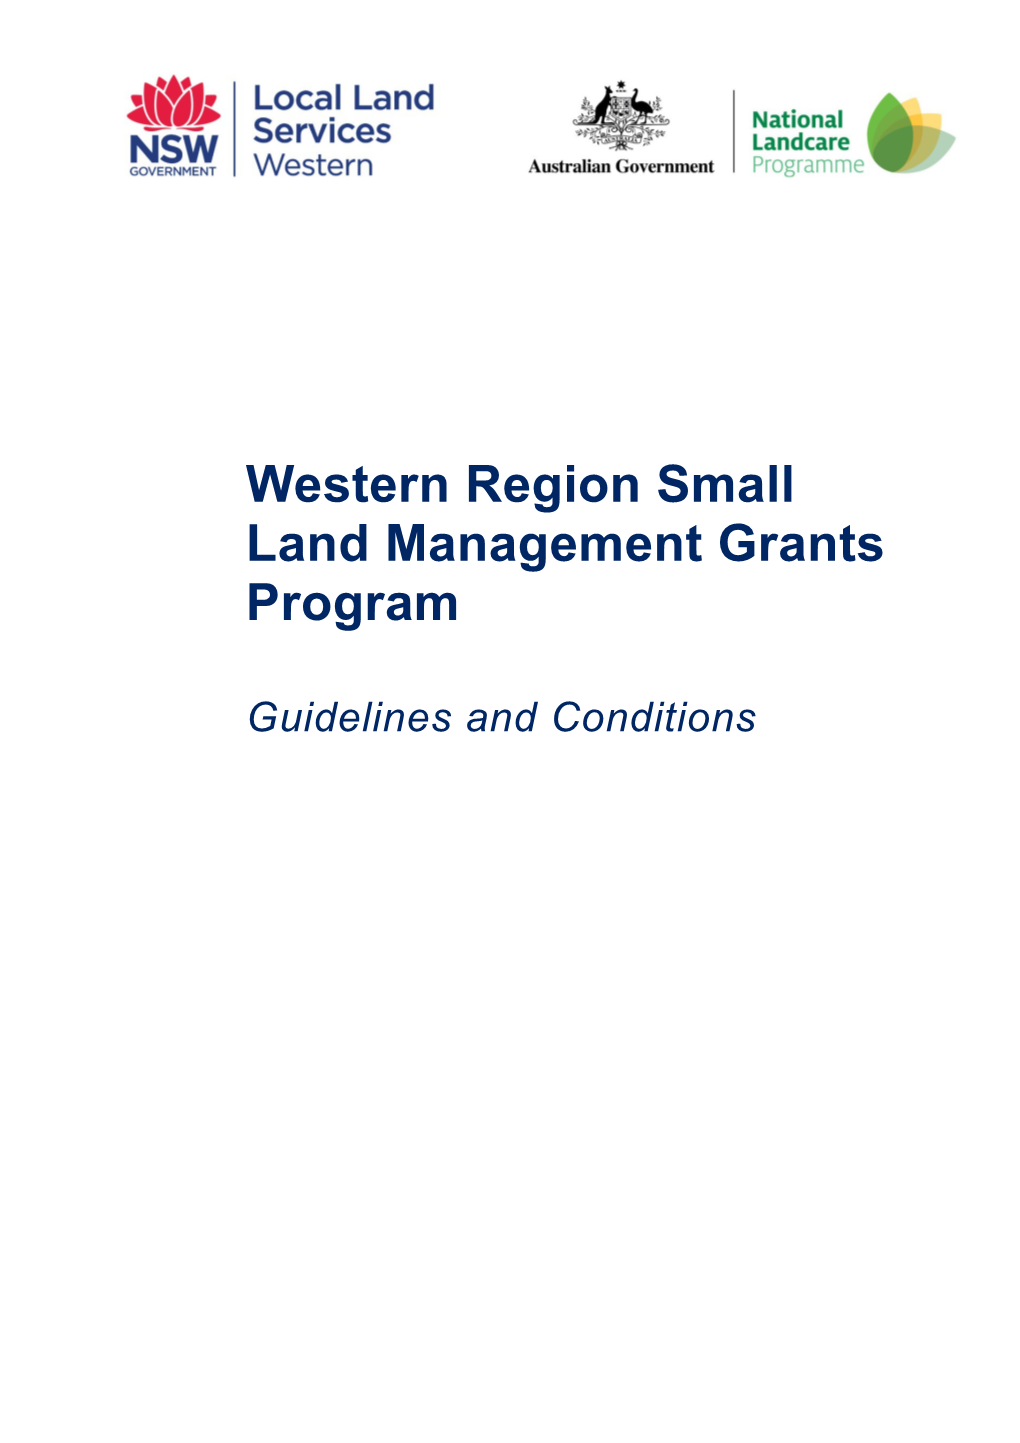 Western Region Small Land Management Grants Program